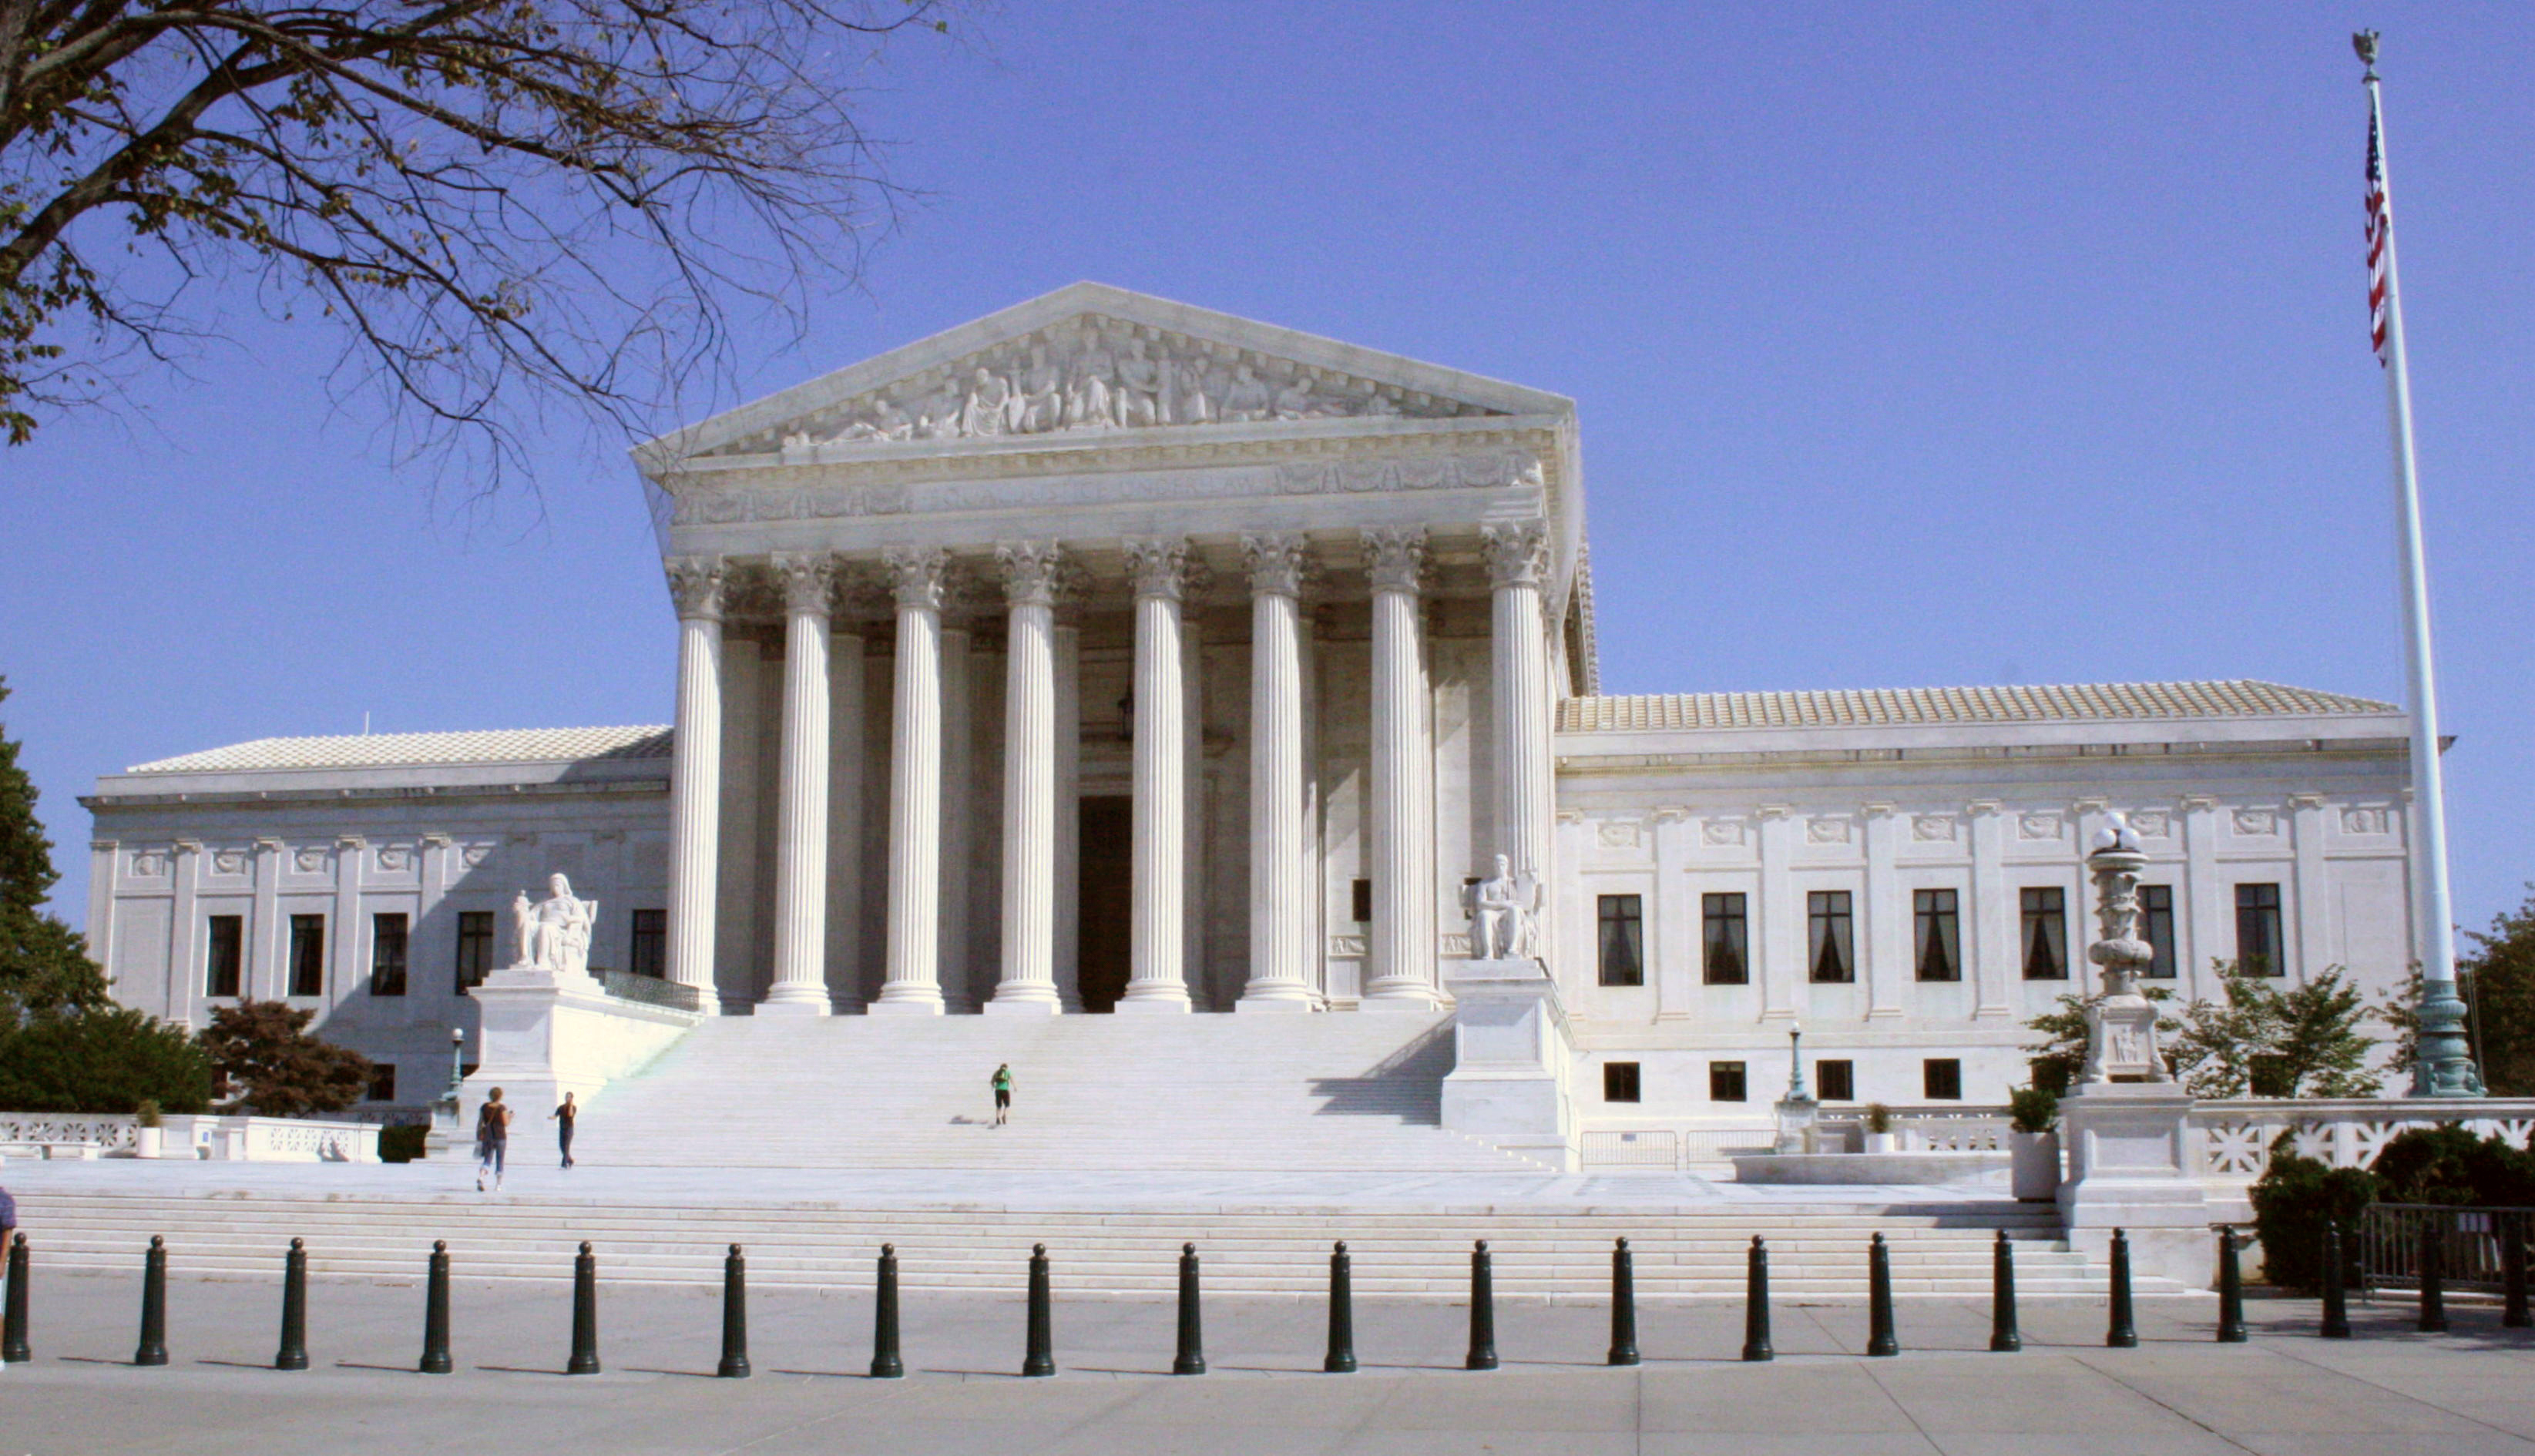 U.S. Supreme Court building